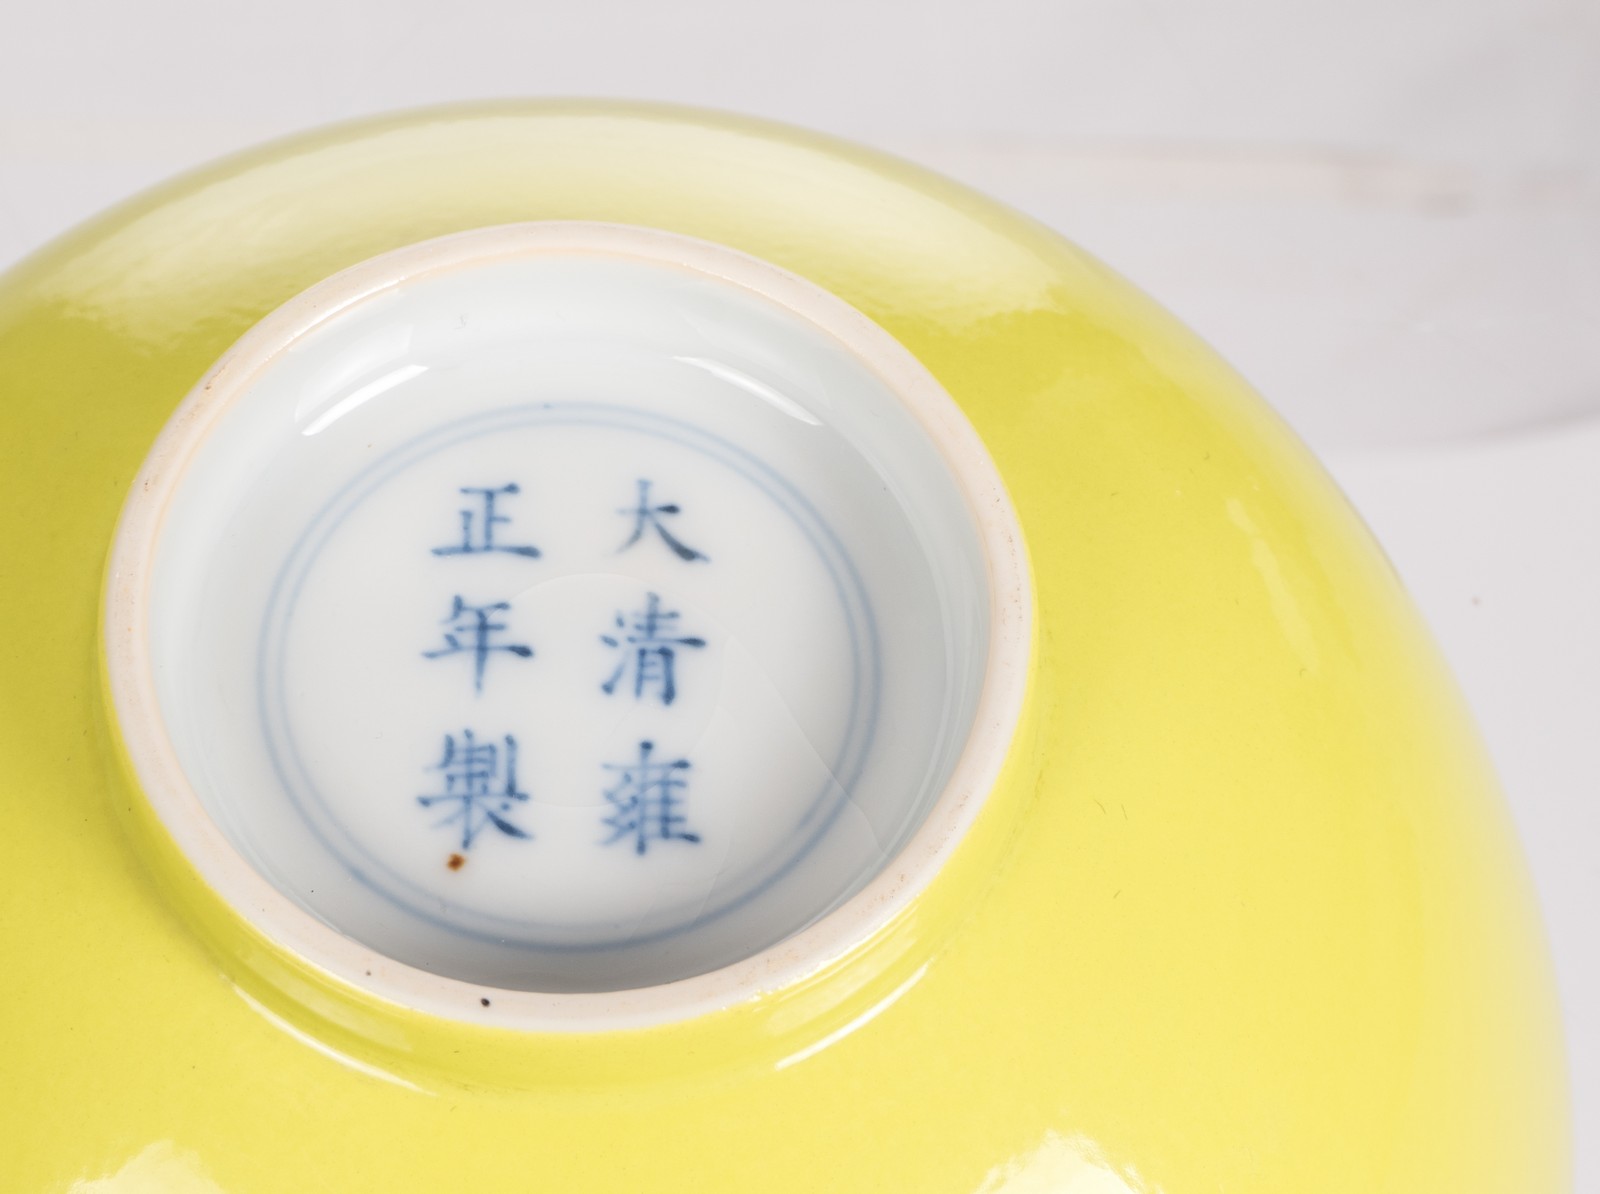 A Chinese green lemon monochrome bowl, marked Yongzheng, Qing dynasty, H 6,5 - Diameter 14,5 cm ( - Image 8 of 8